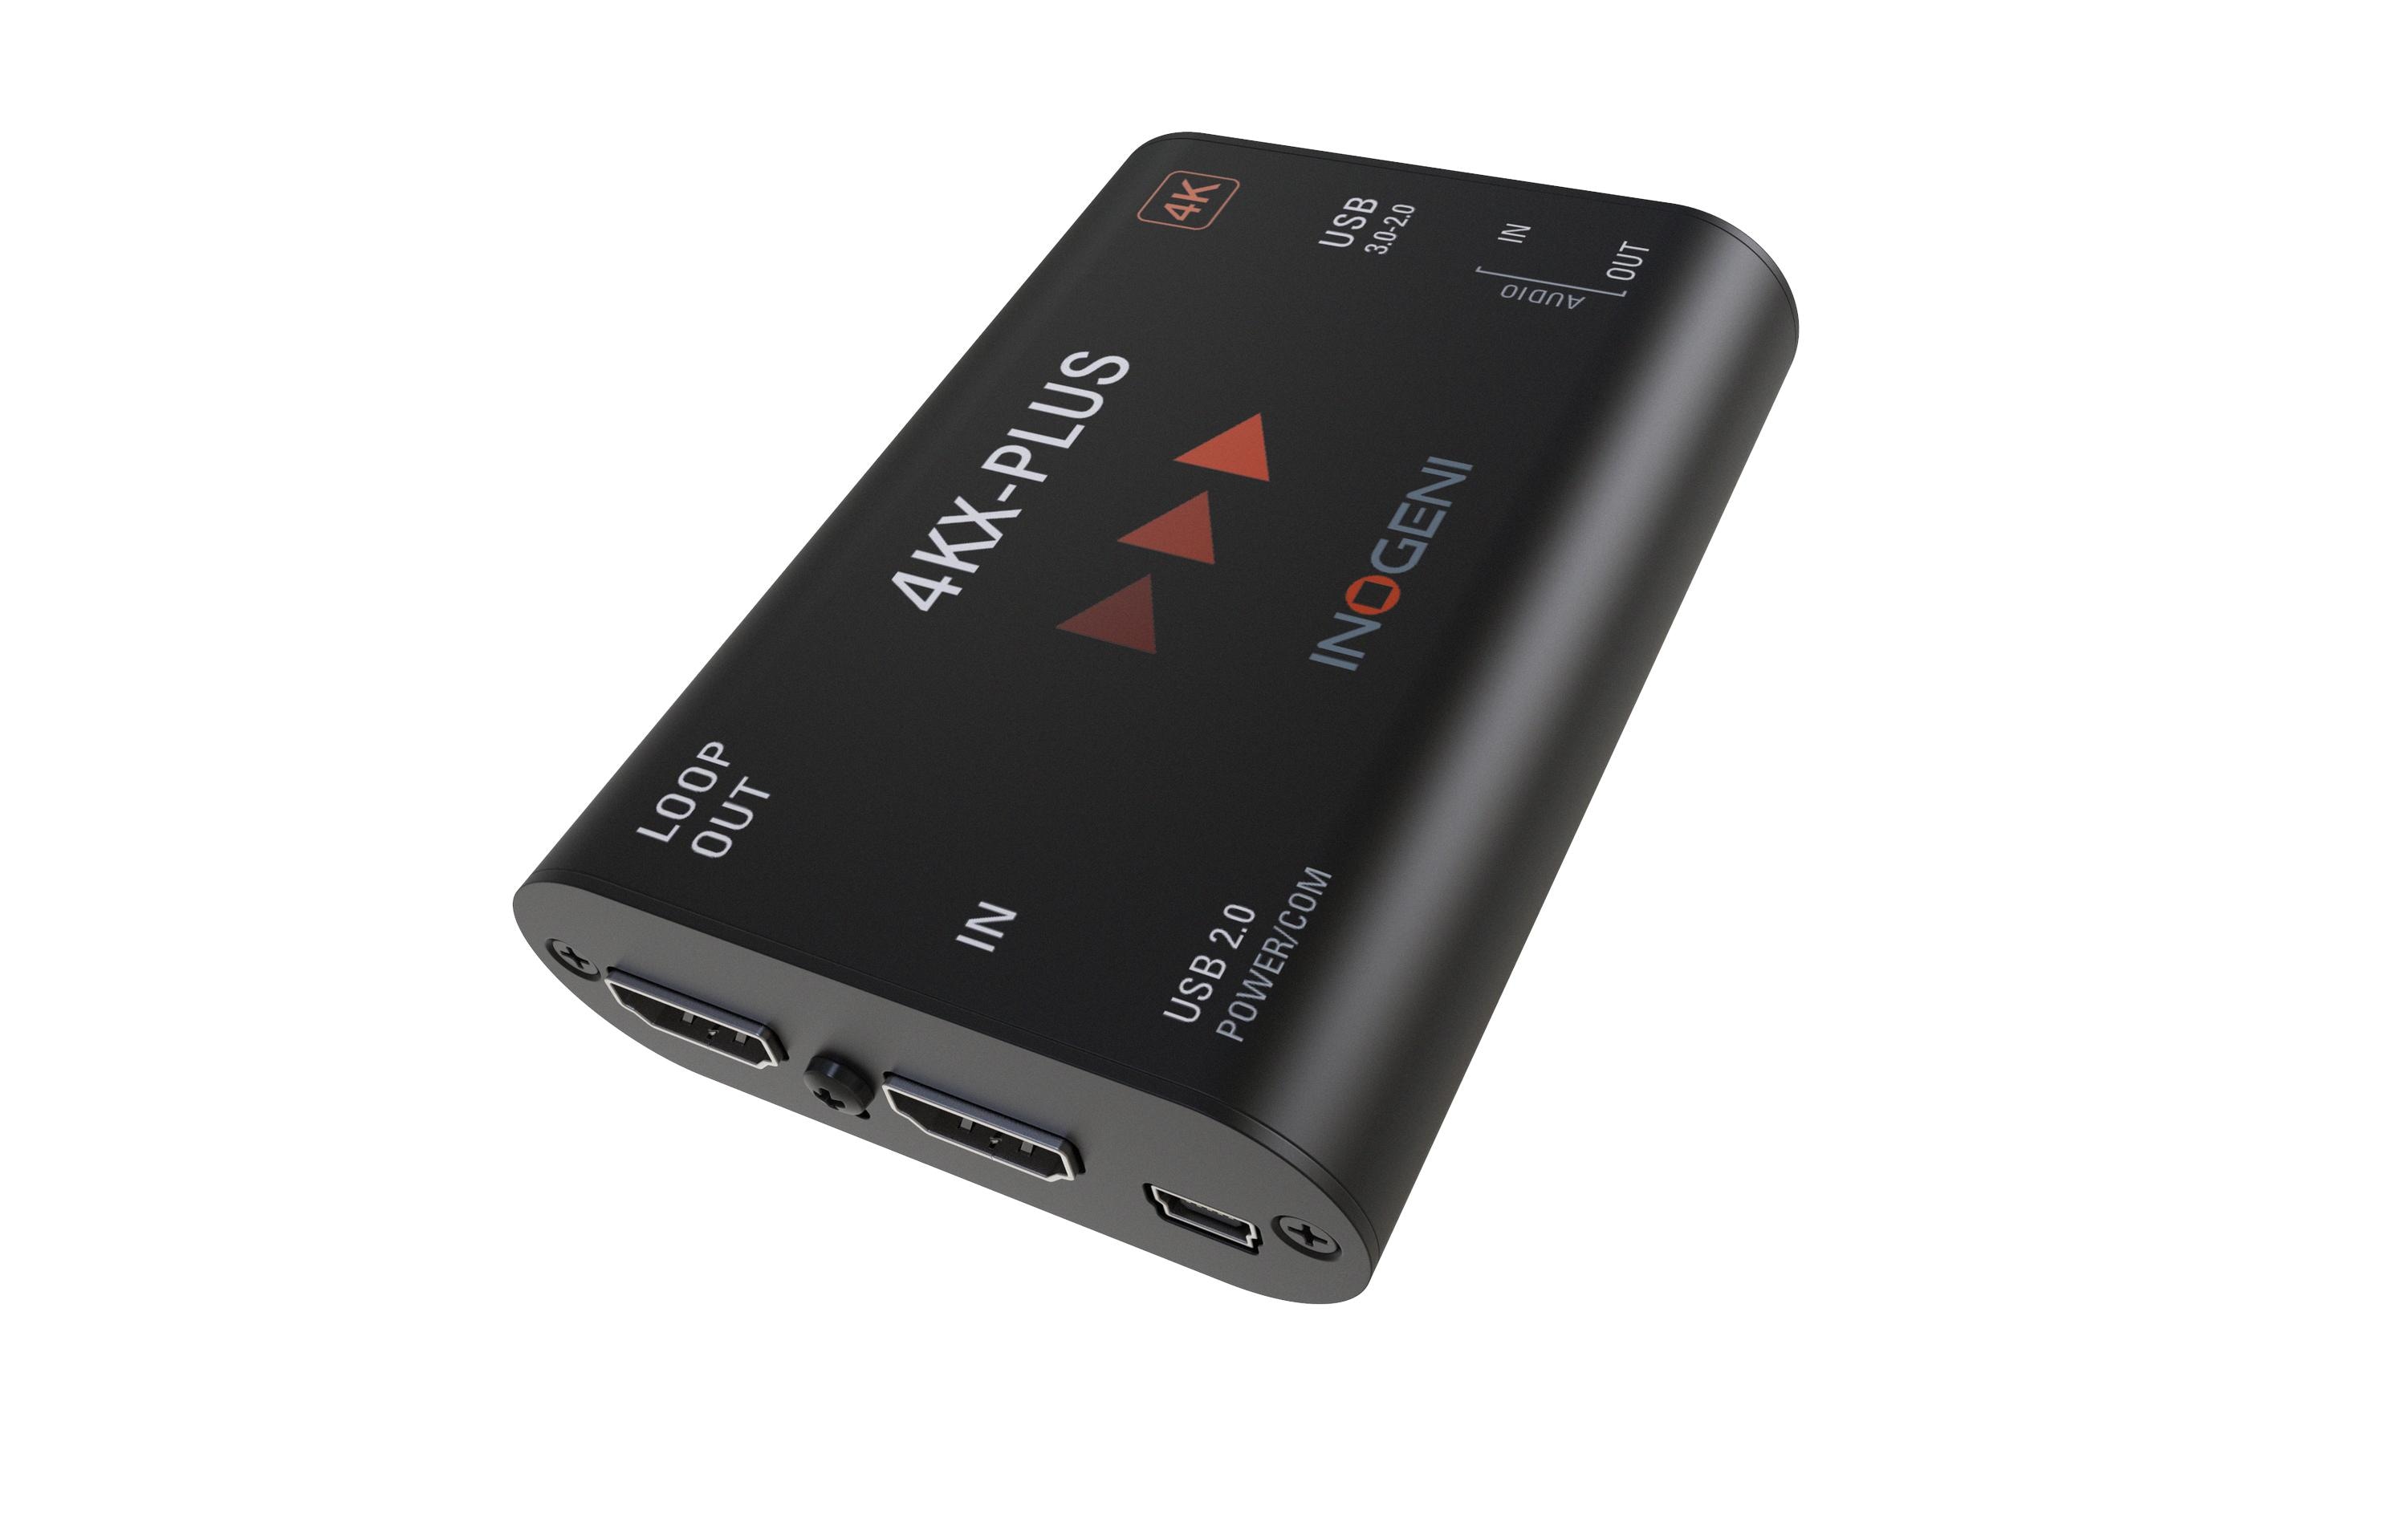 Inogeni Konverter 4KX-Plus HDMI – USB 3.0